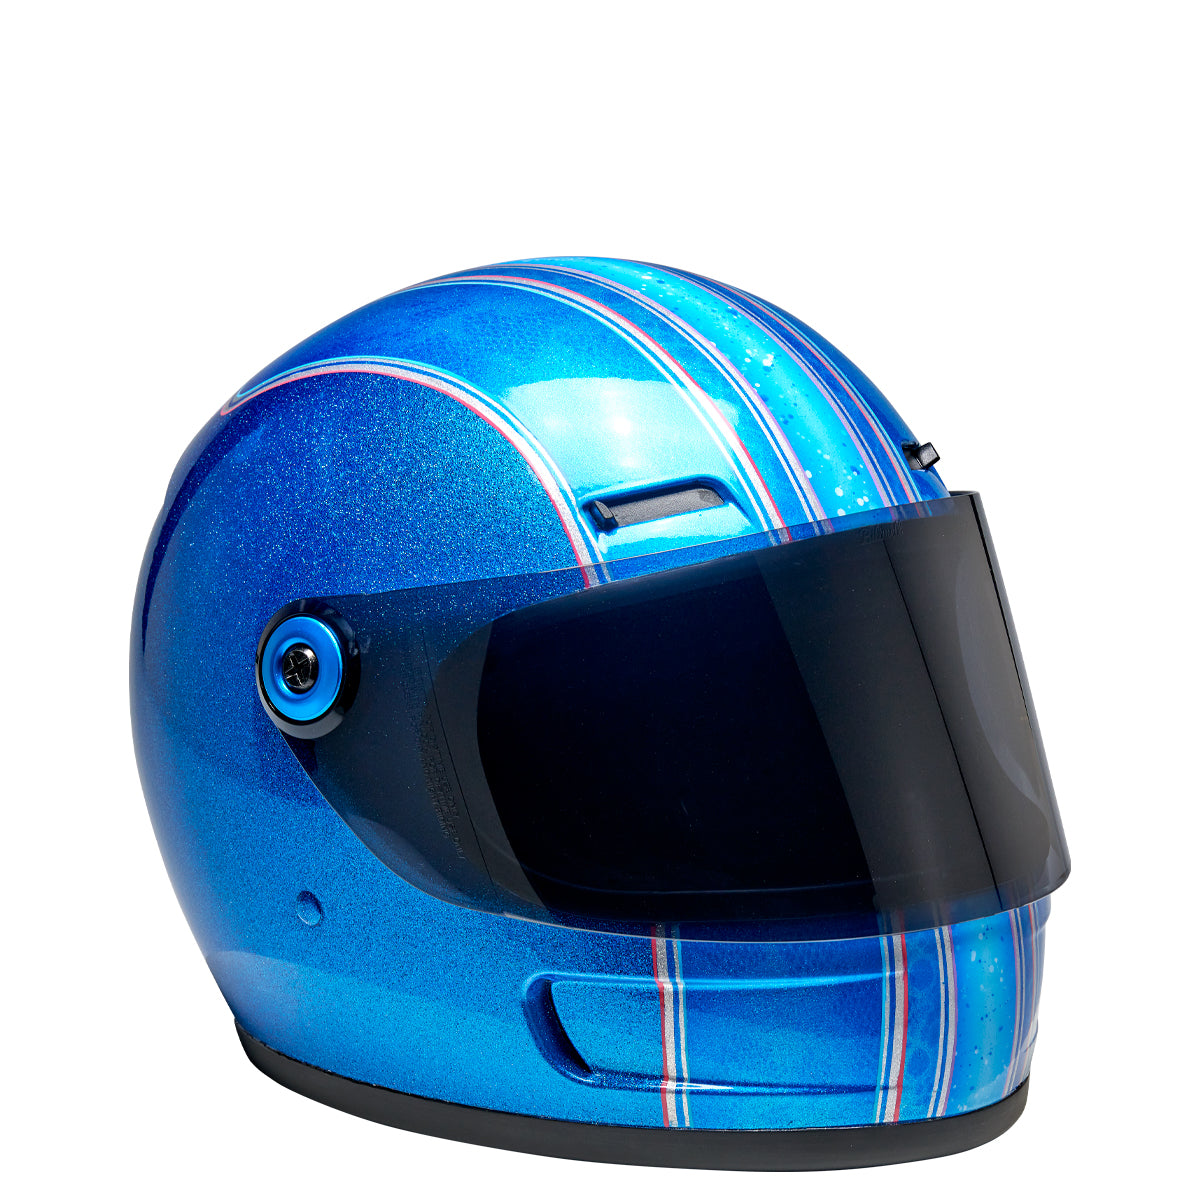 Custom Painted Gringo SV Helmet by Michelle Lefrancois